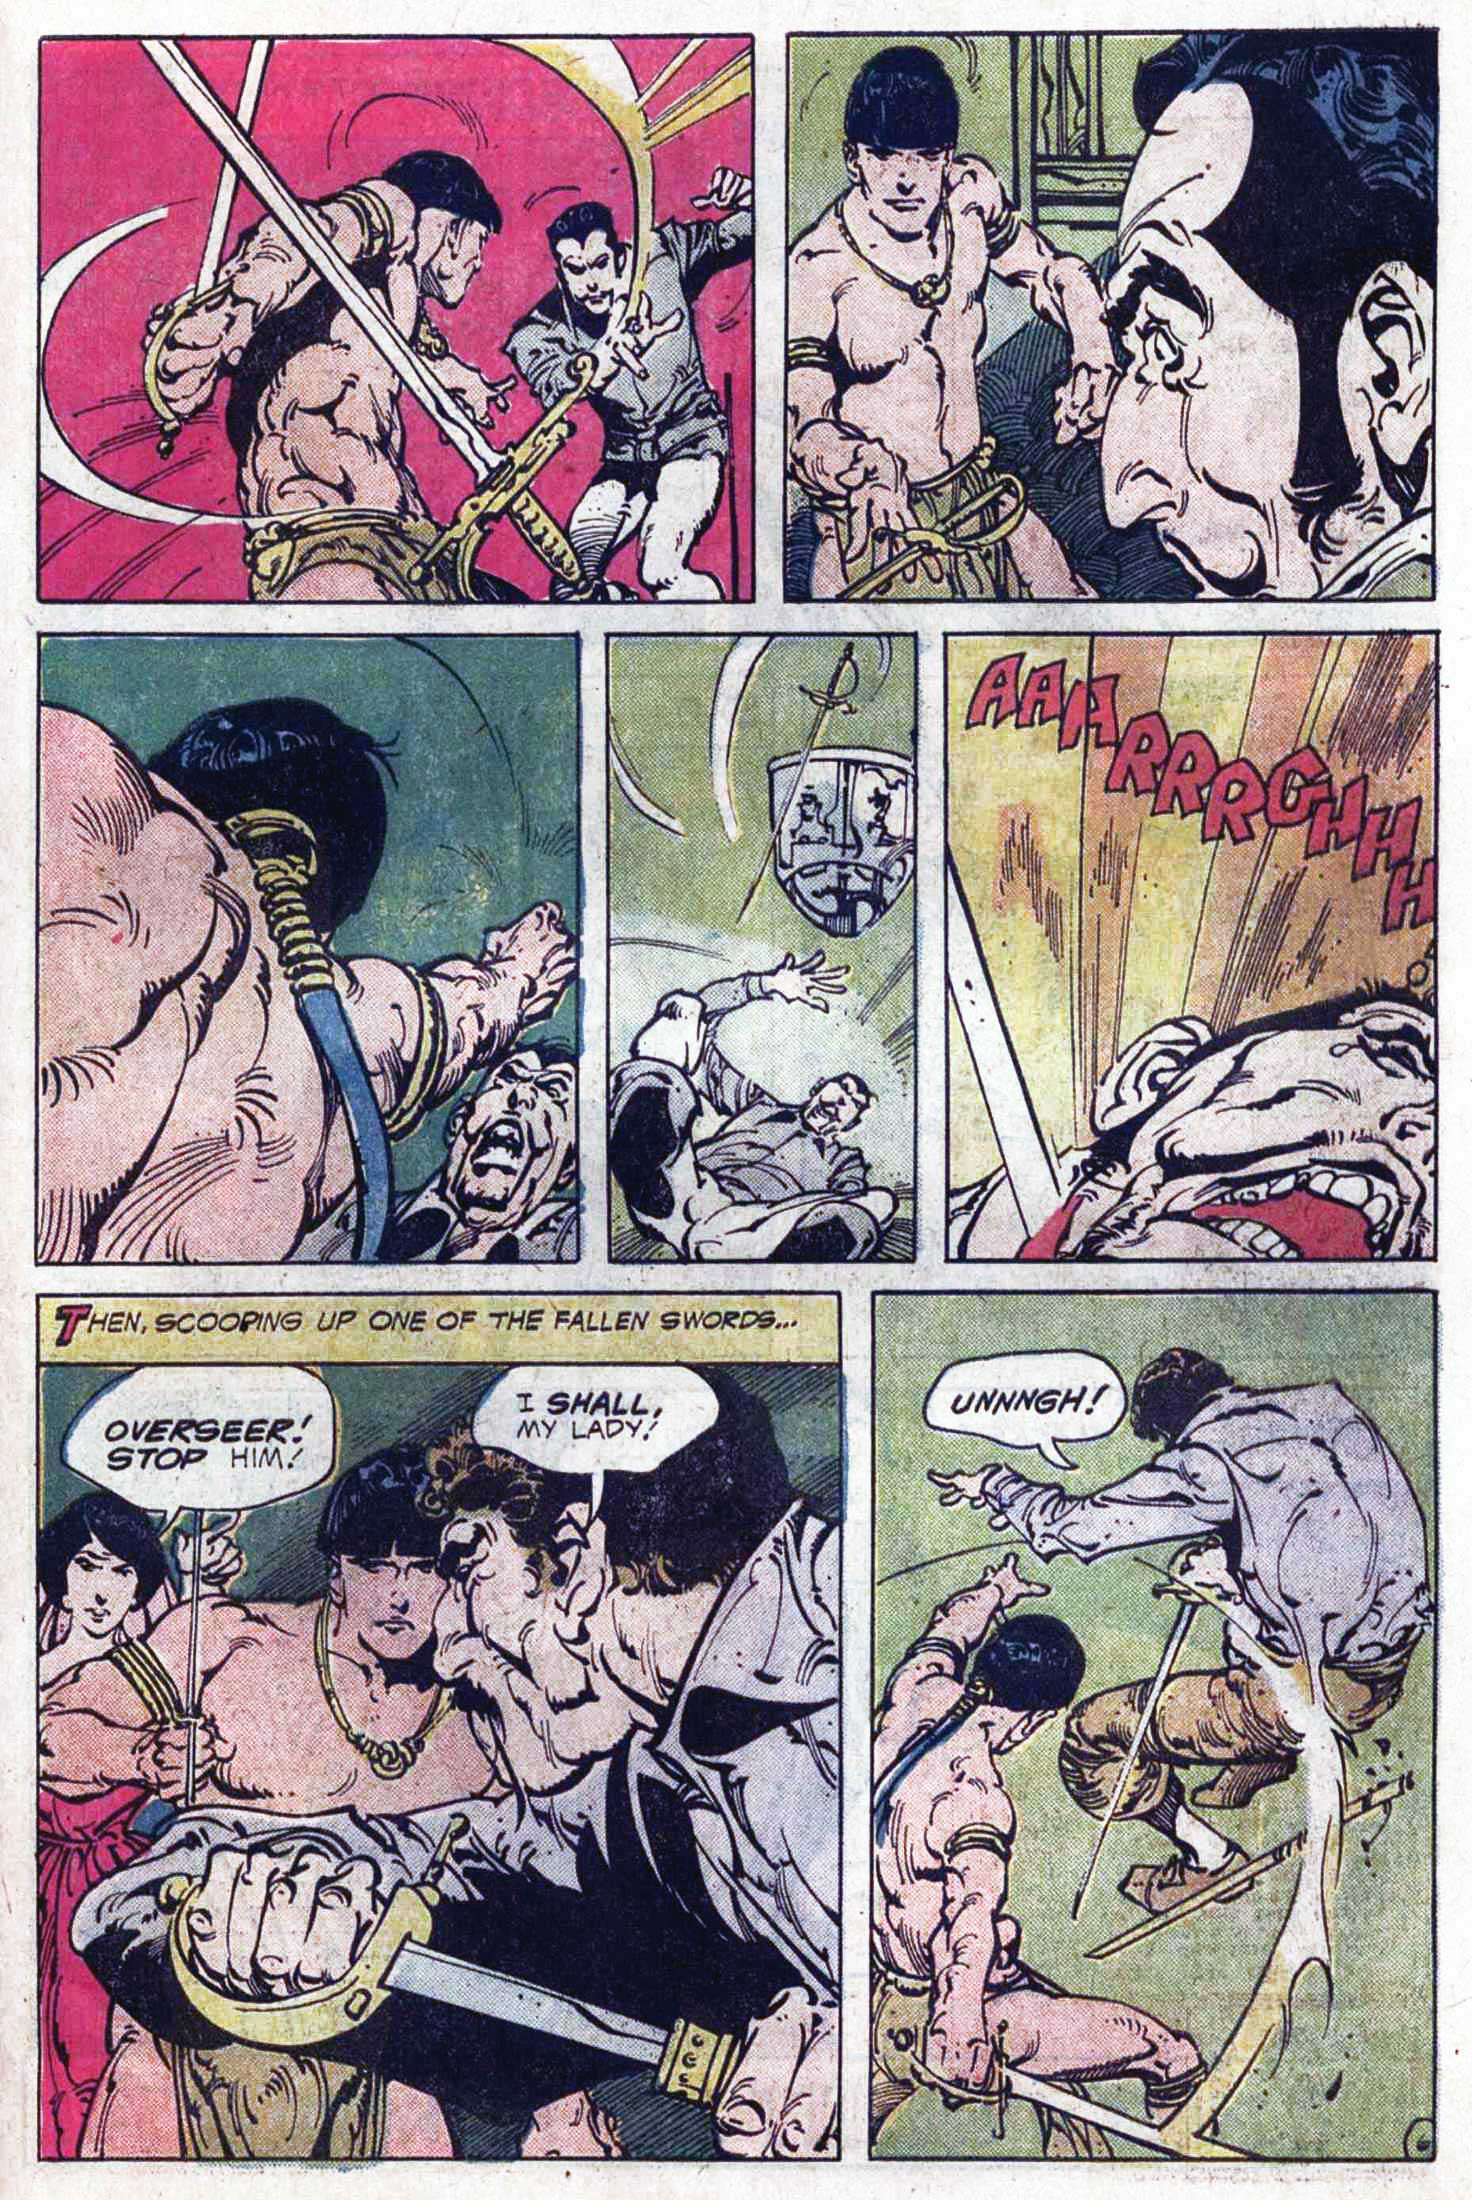 Adventure Comics #432 (1974) by Steve Skeates and Alex Nino